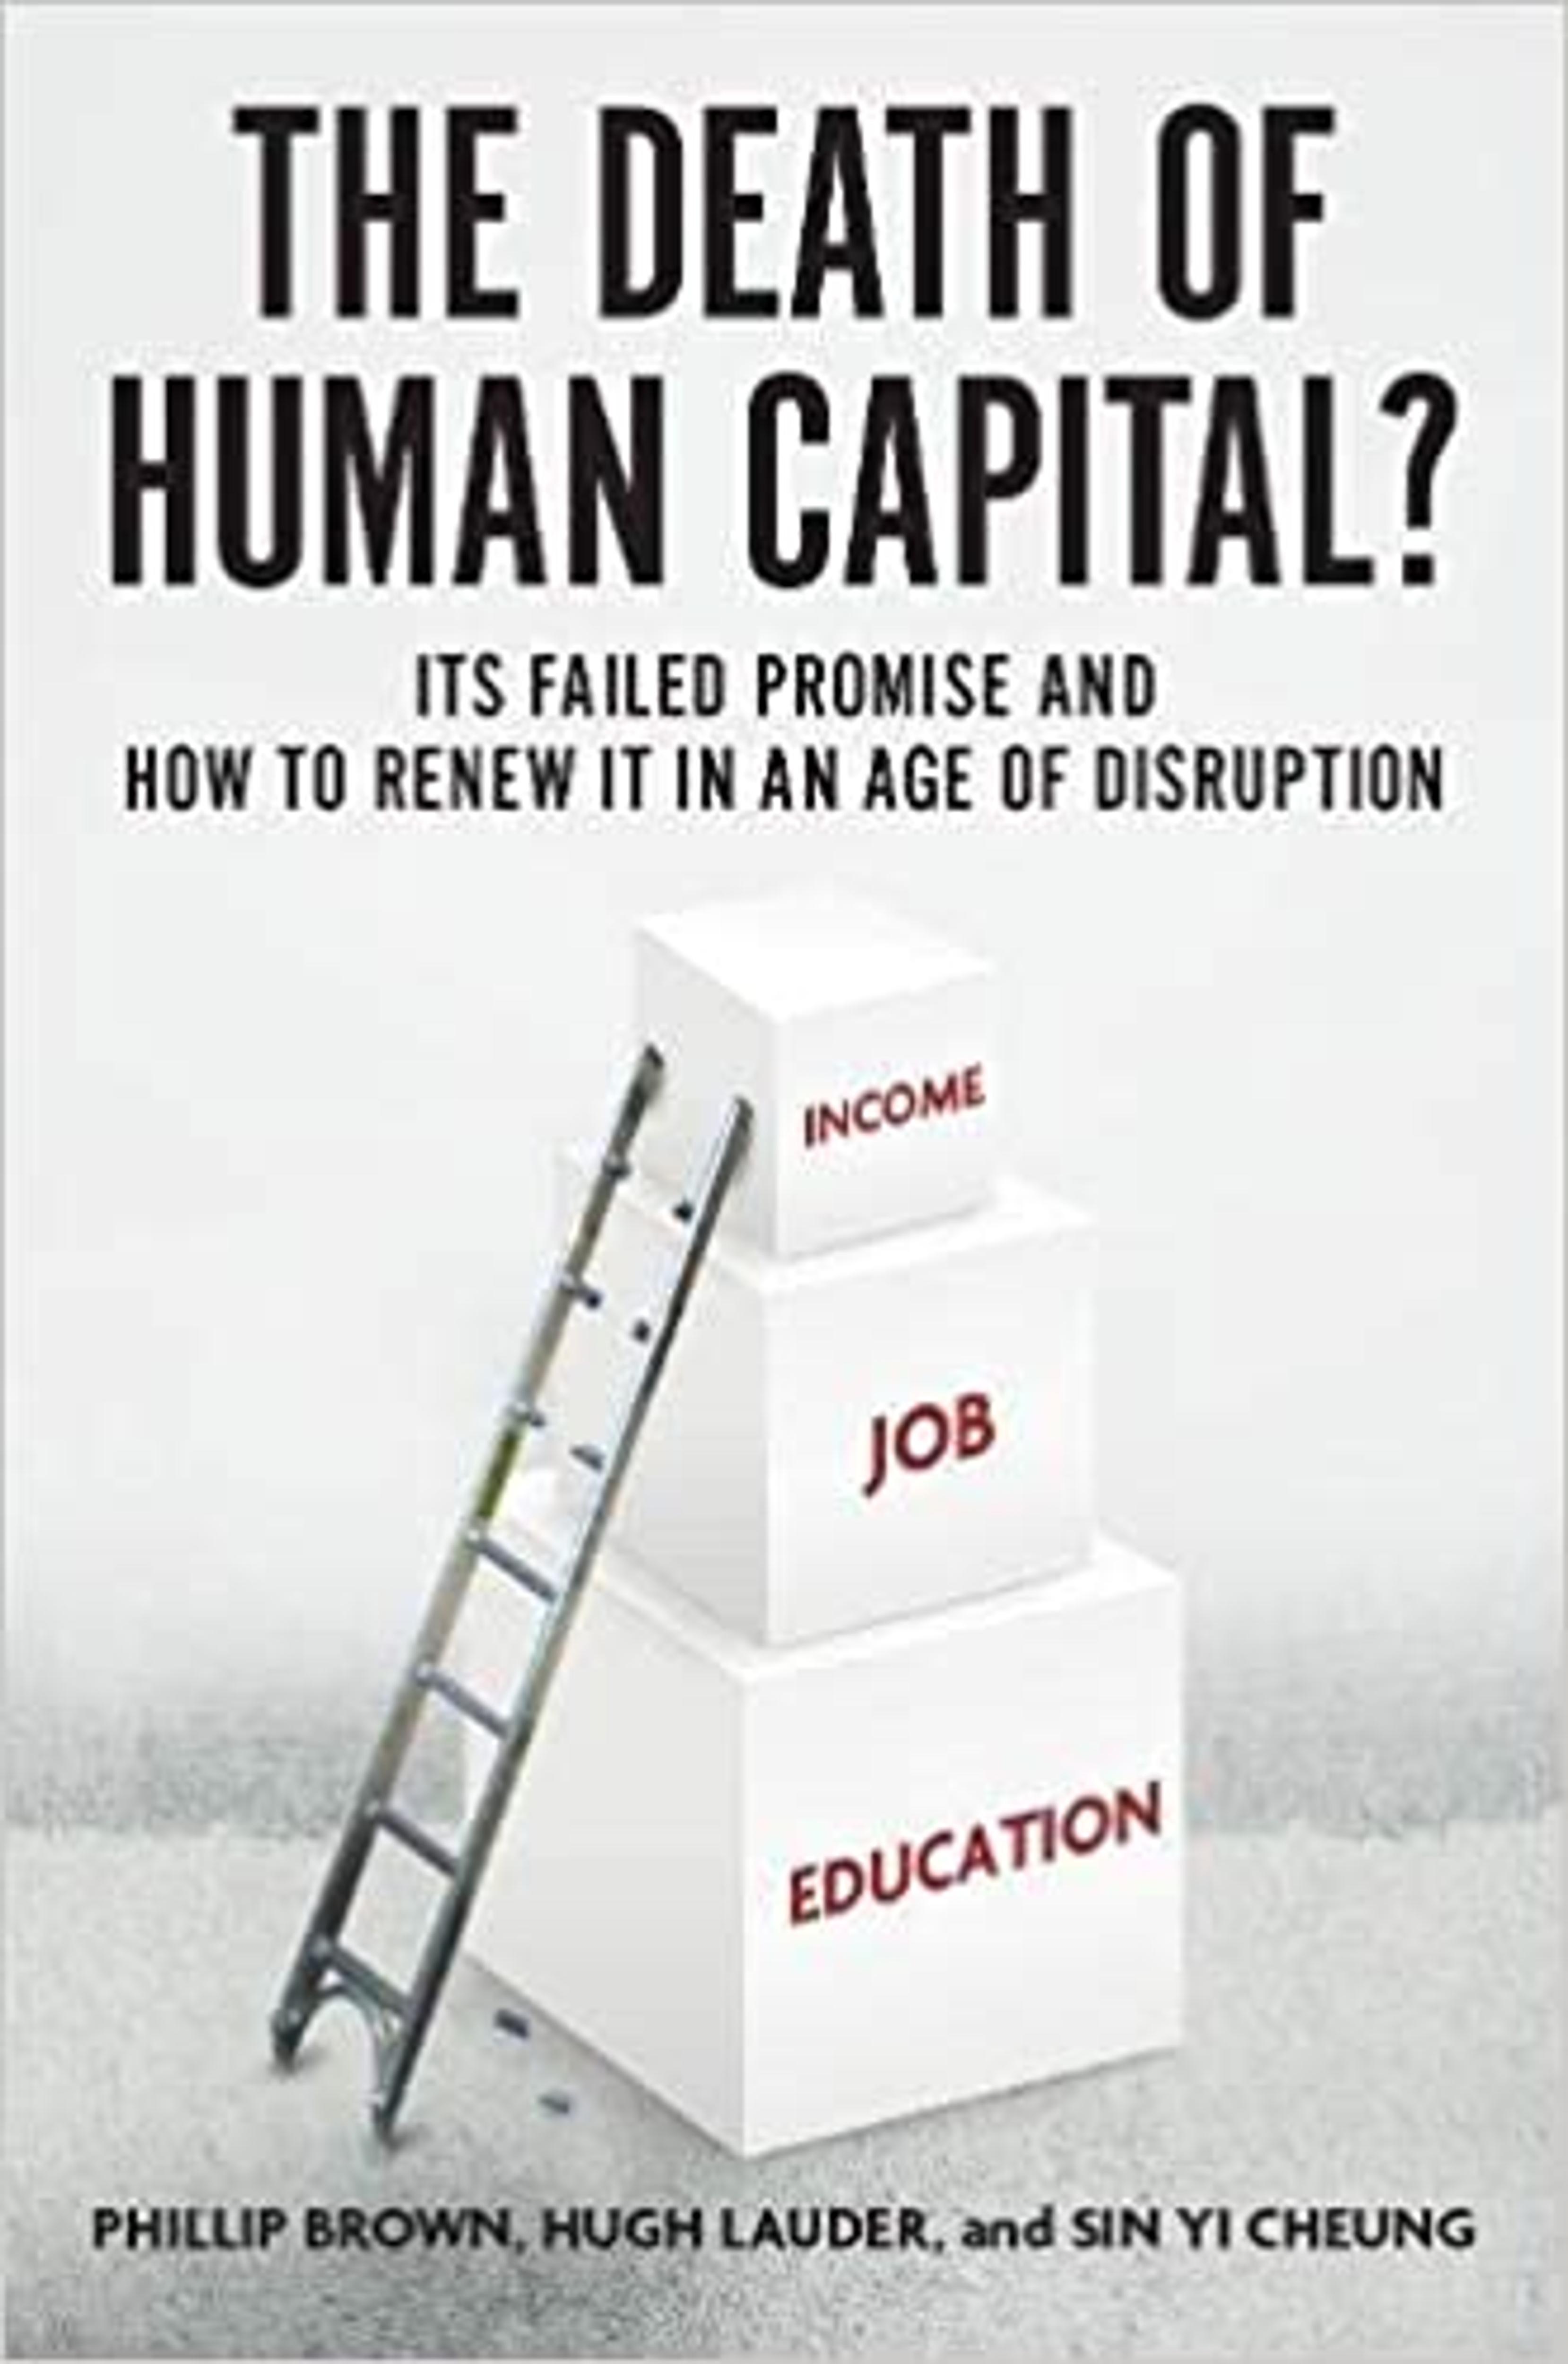 A Socialist Alternative to Human Capital Theory?